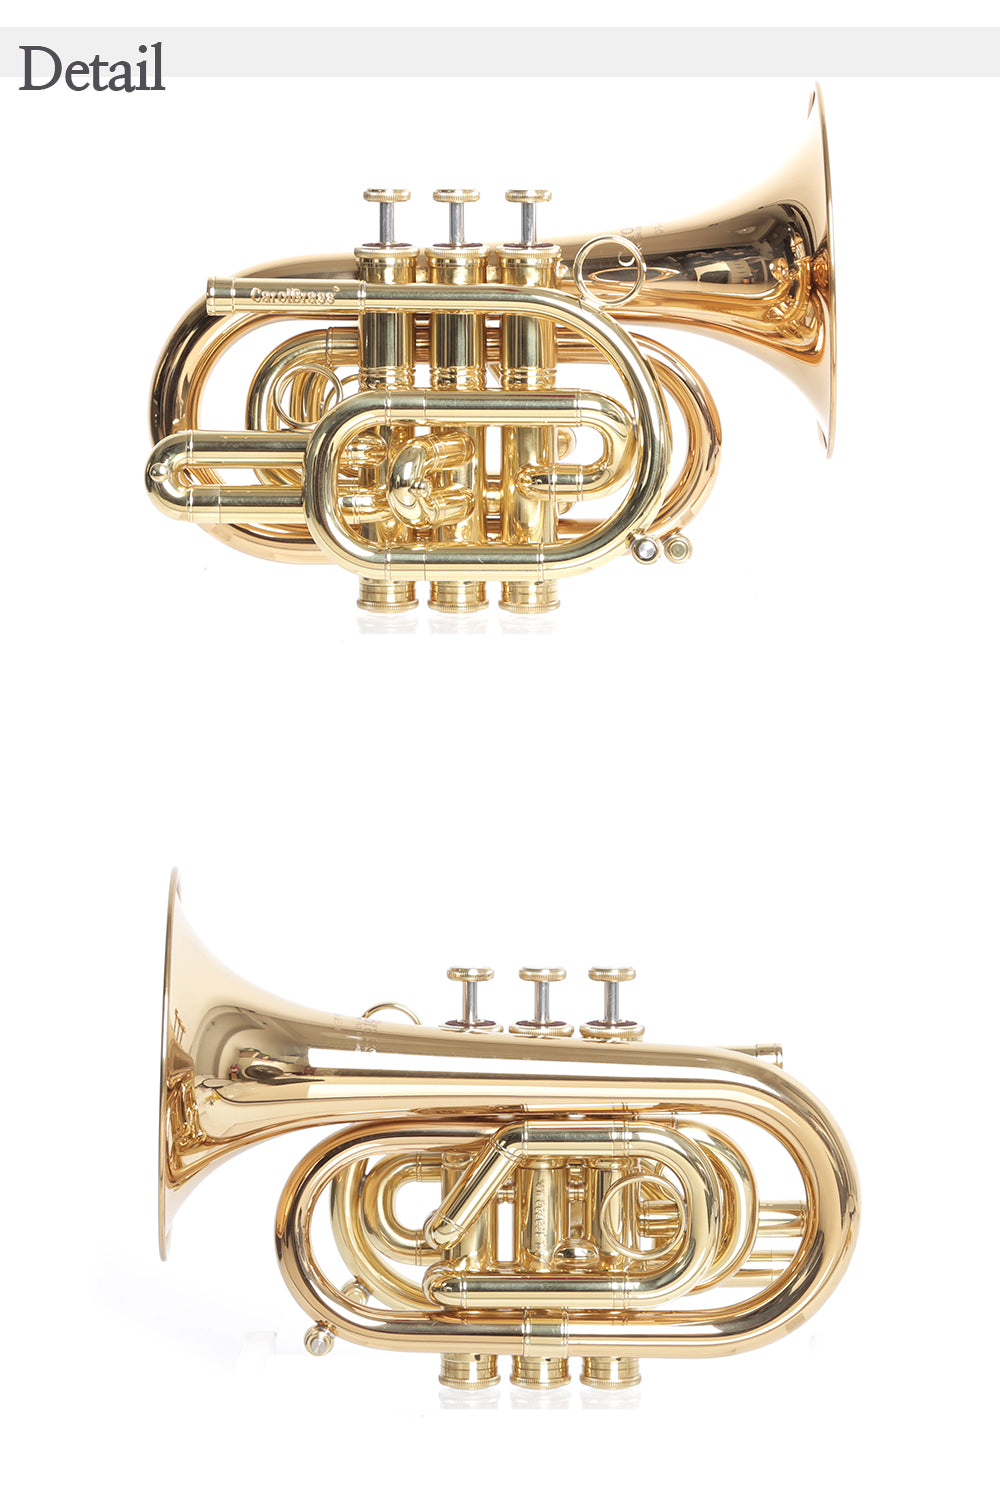 Carol Brass Bb Pocket Trumpet - Sandoval Signature [CPT-3002-RLM(D)-Bb –  ACCMUSIC STORE